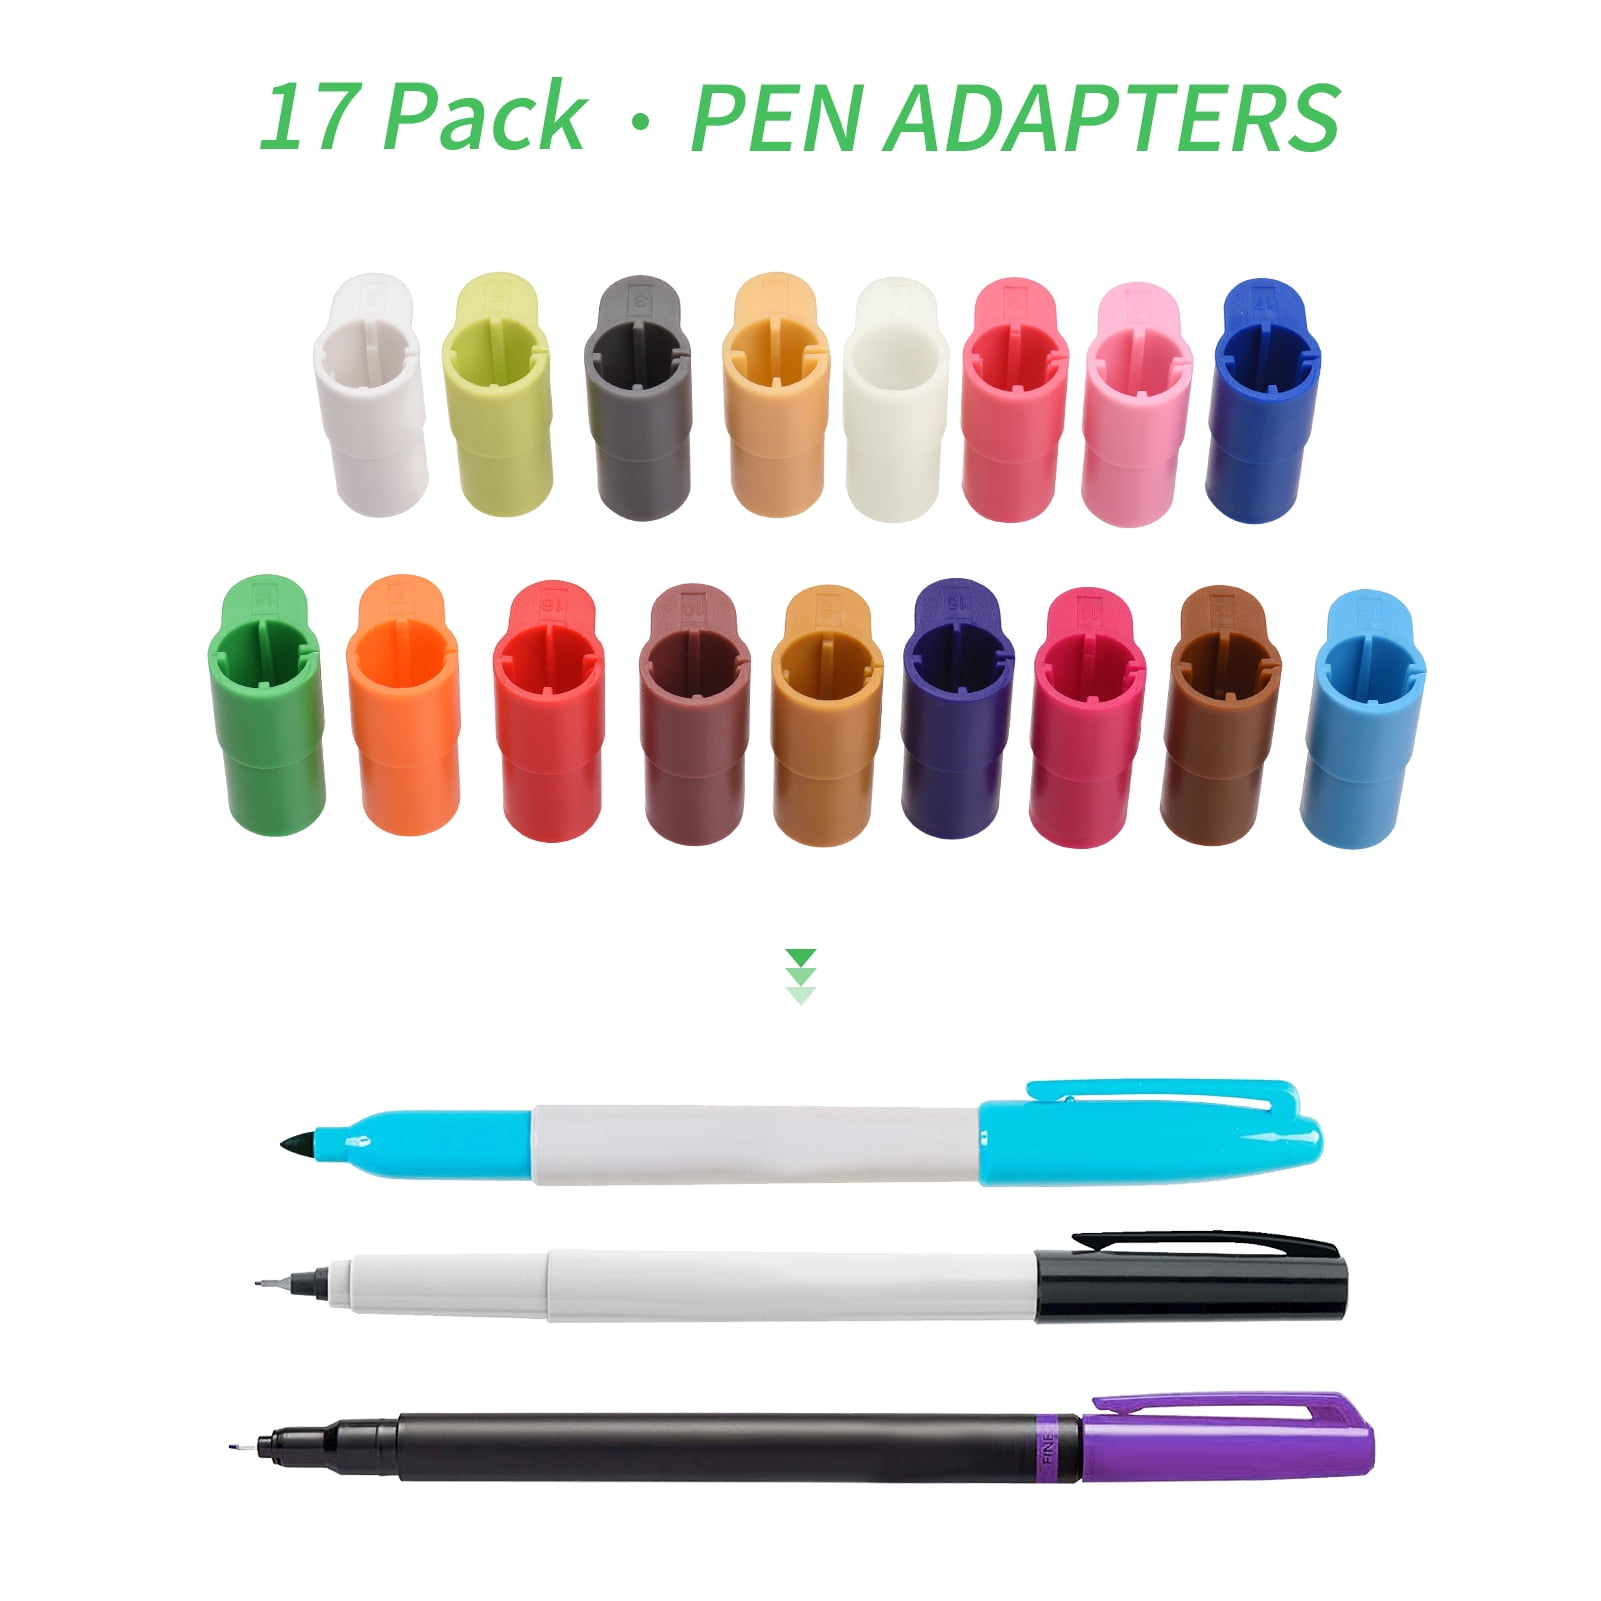 POSCA 1MR / 1MC Uni-ball Pen Adapter Compatible With Cricut